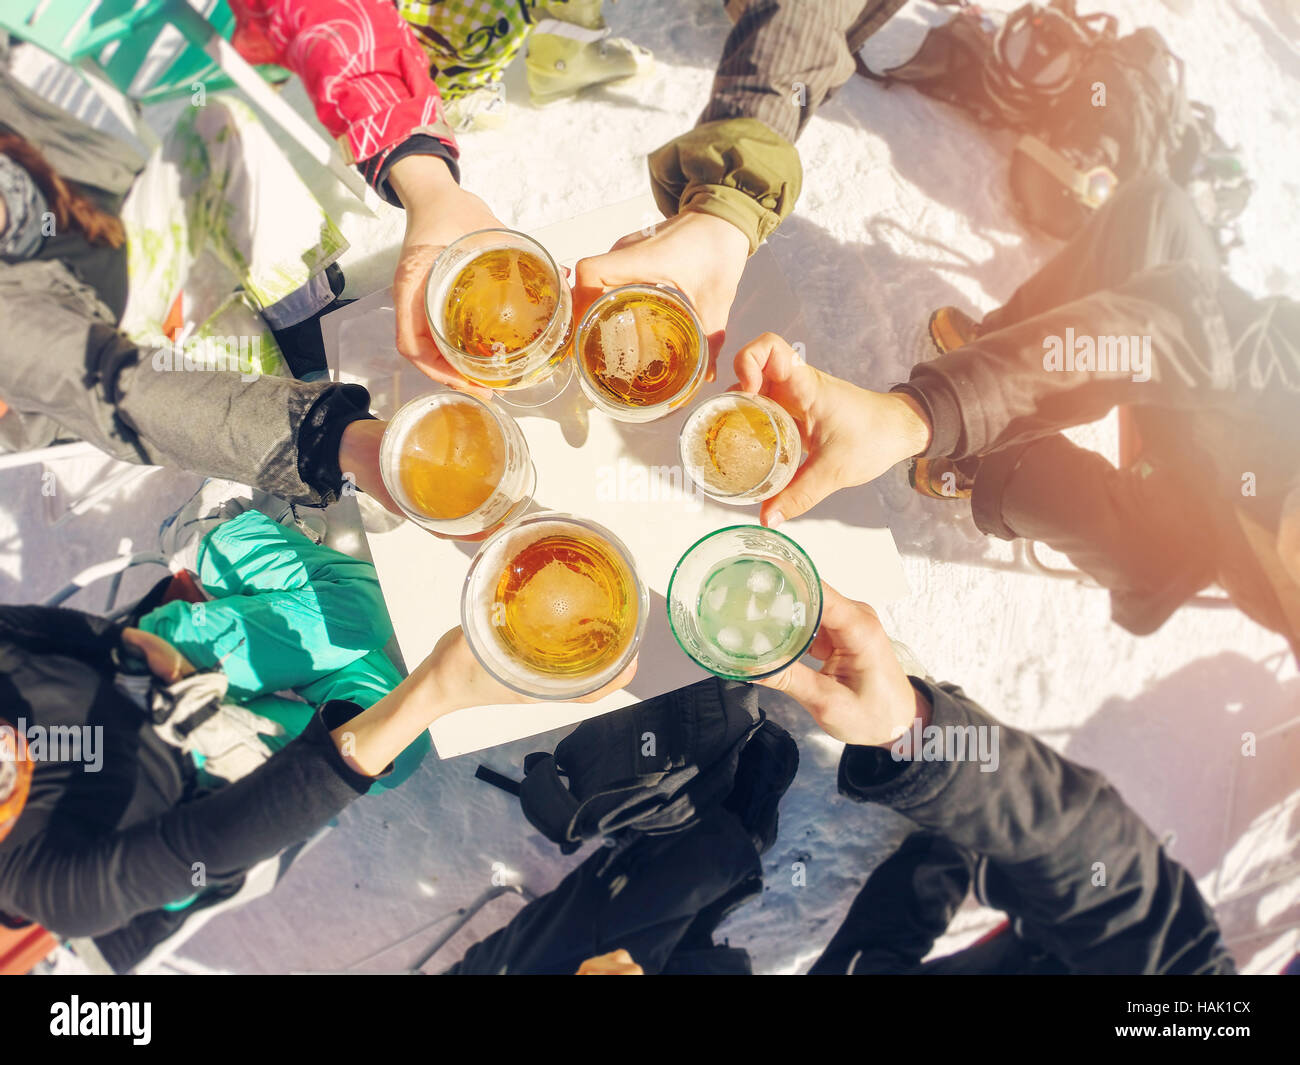 winter holidays - group of friends drinking beer on break at ski resort Stock Photo